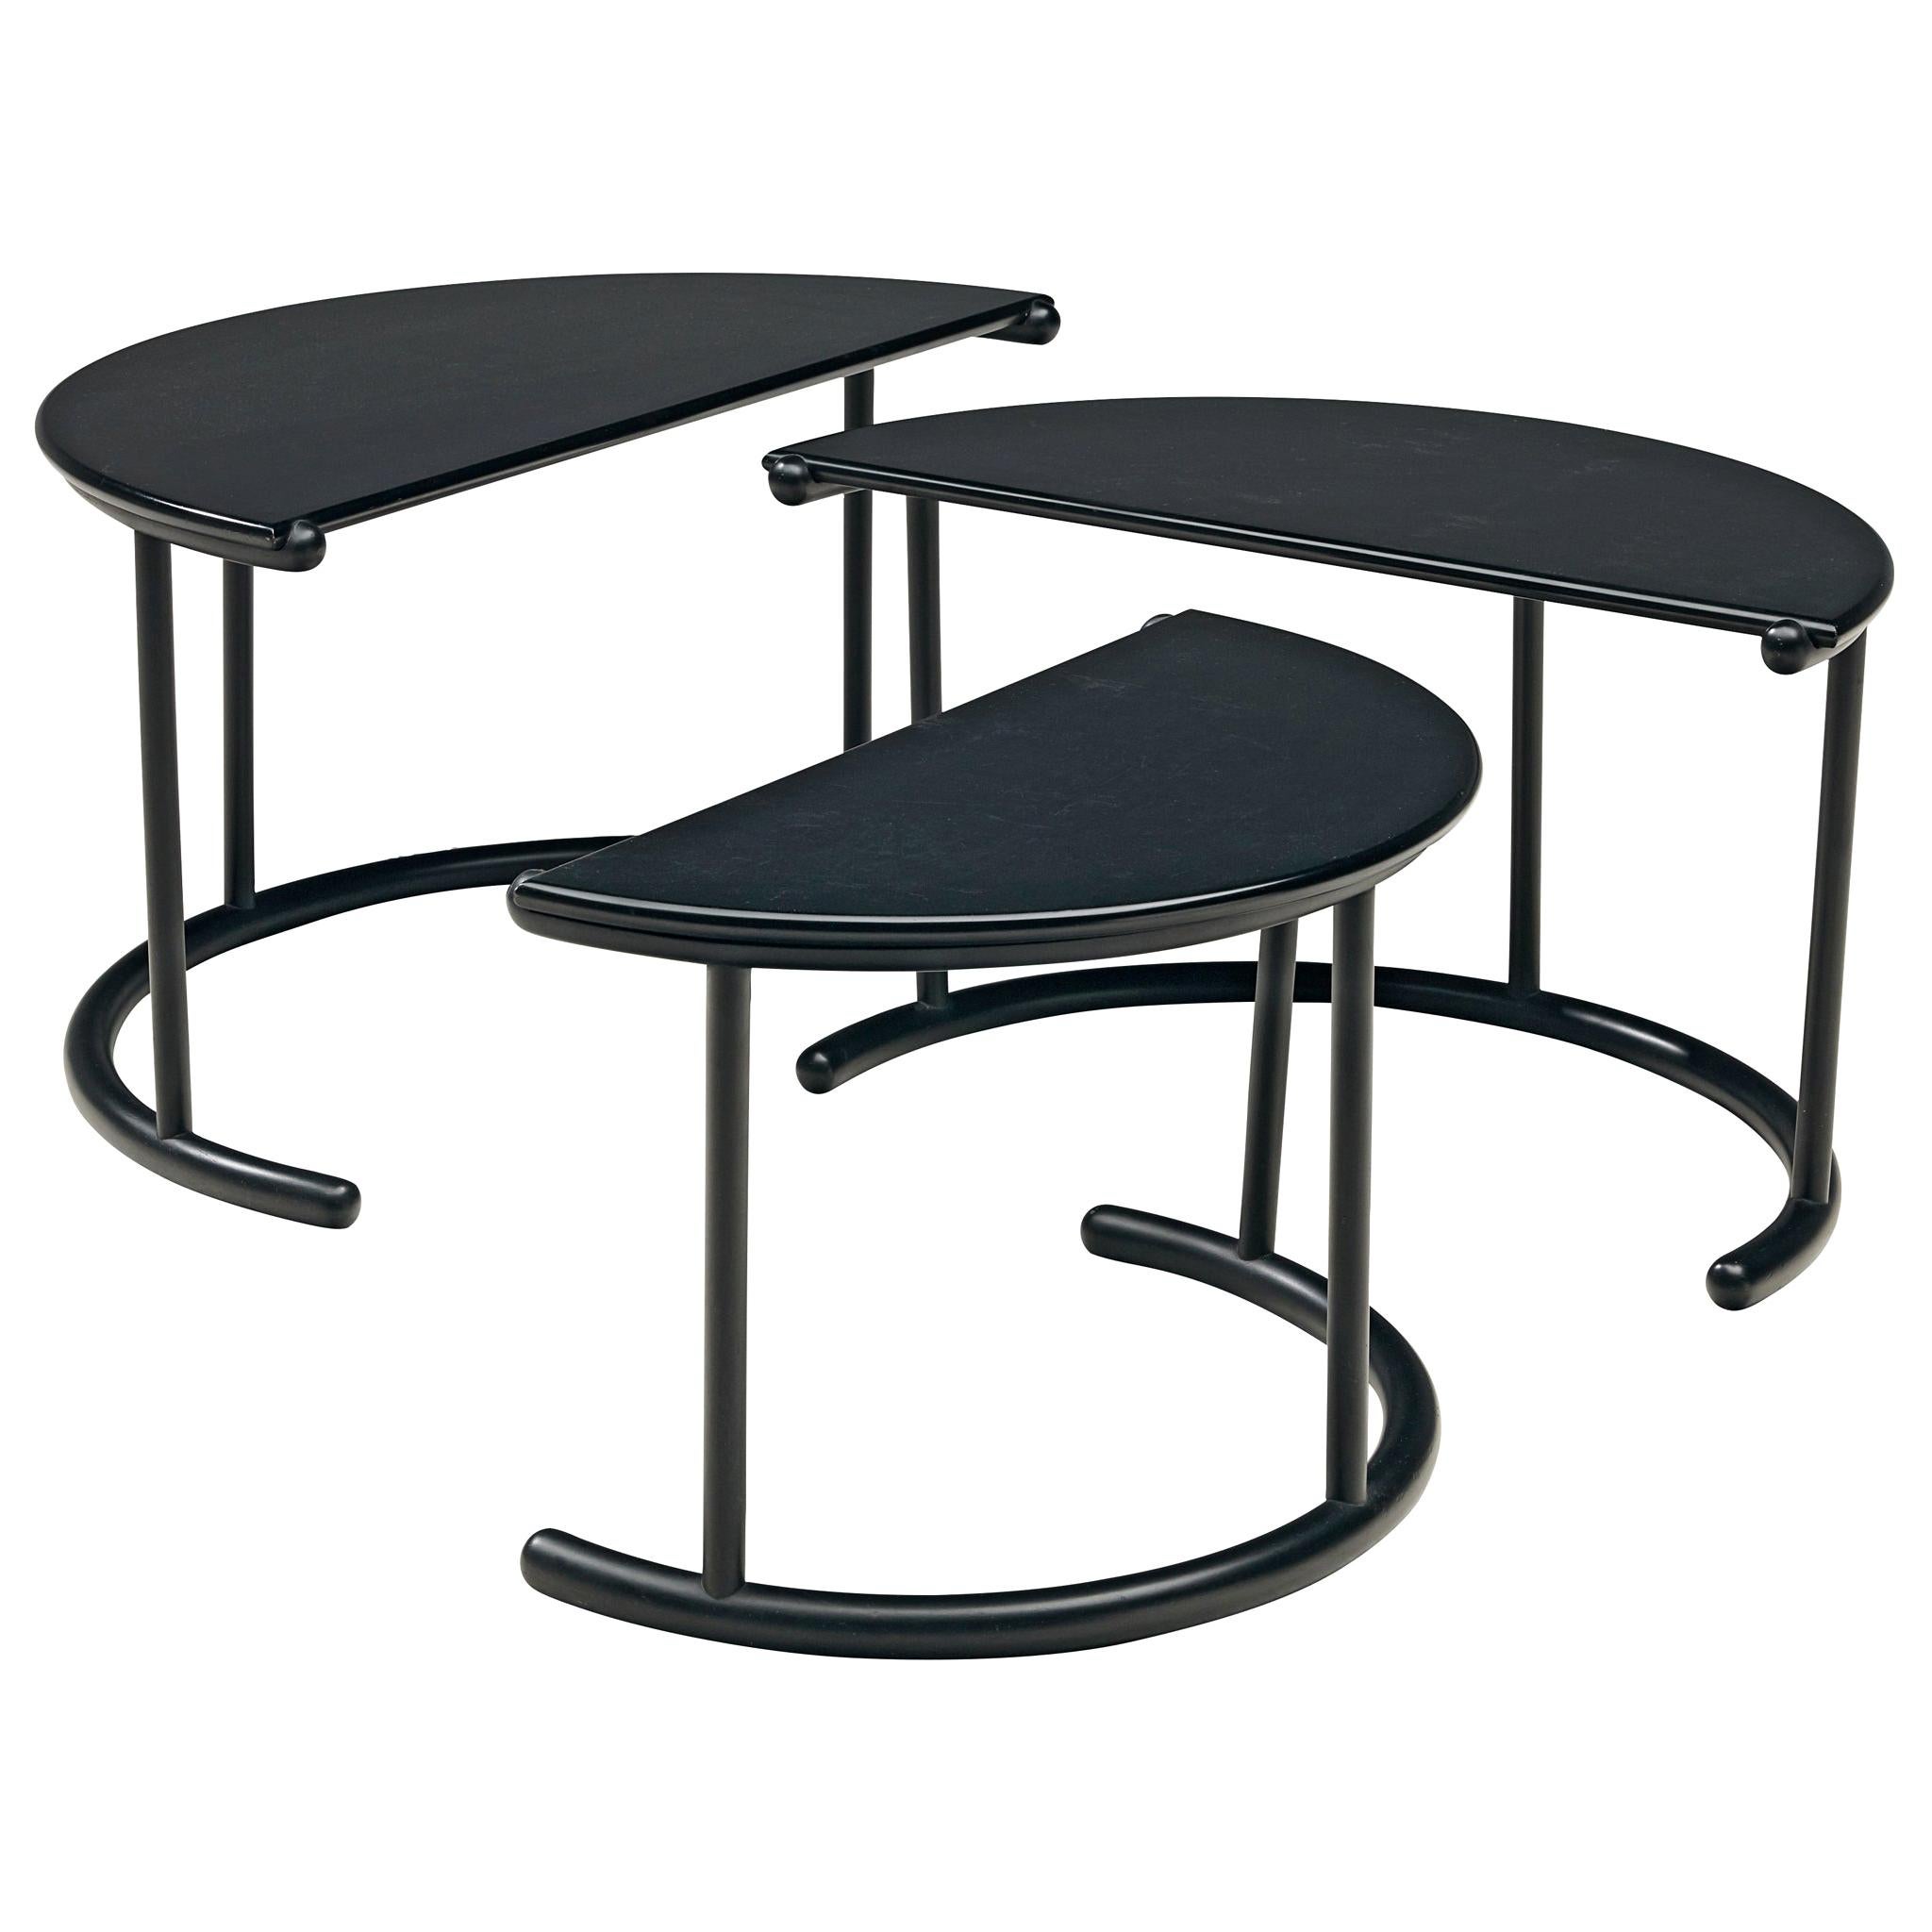 Gianfranco Frattini for Acerbis Nesting Tables 'Tria' in Black  For Sale